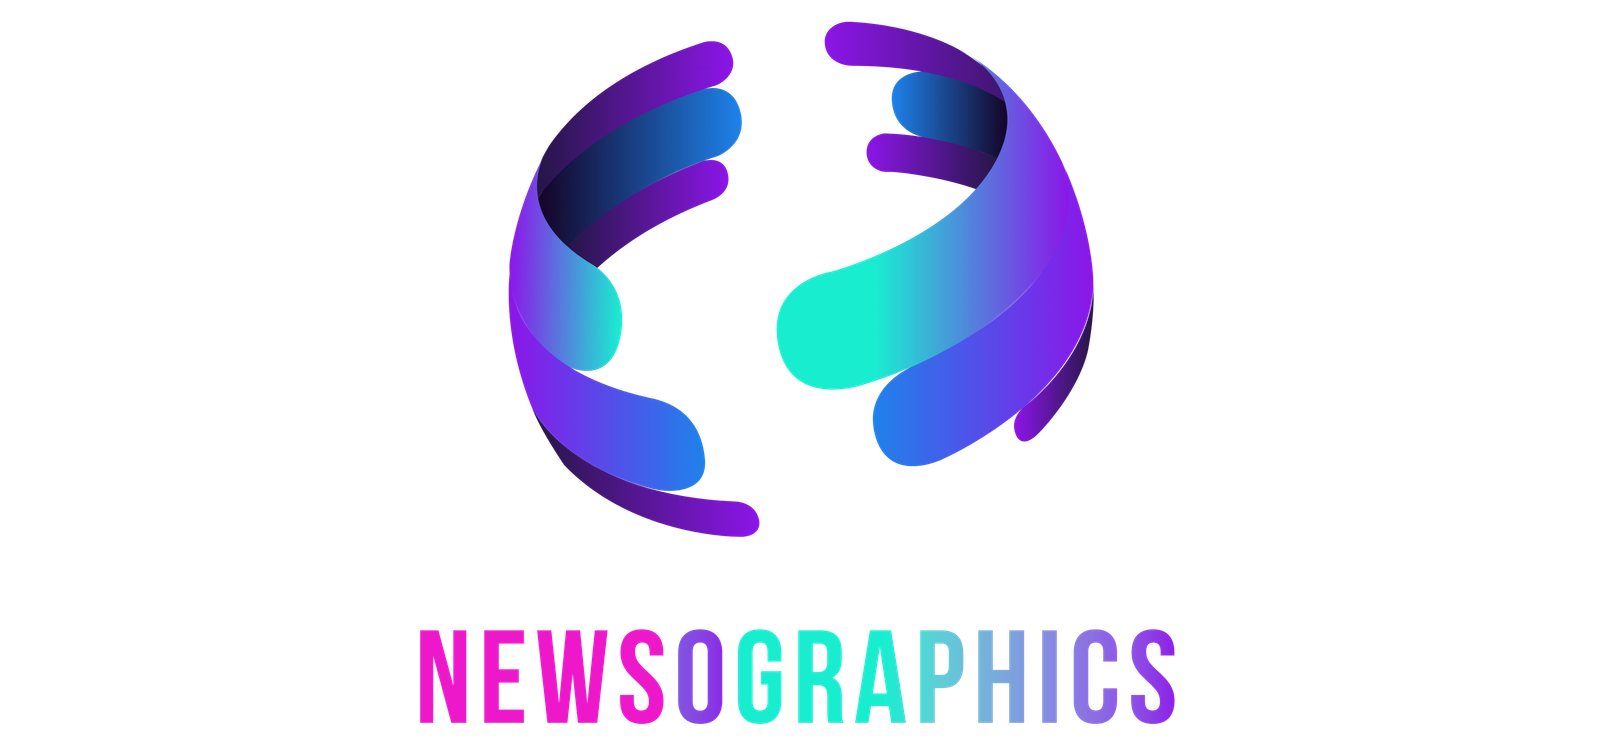 Newsographics